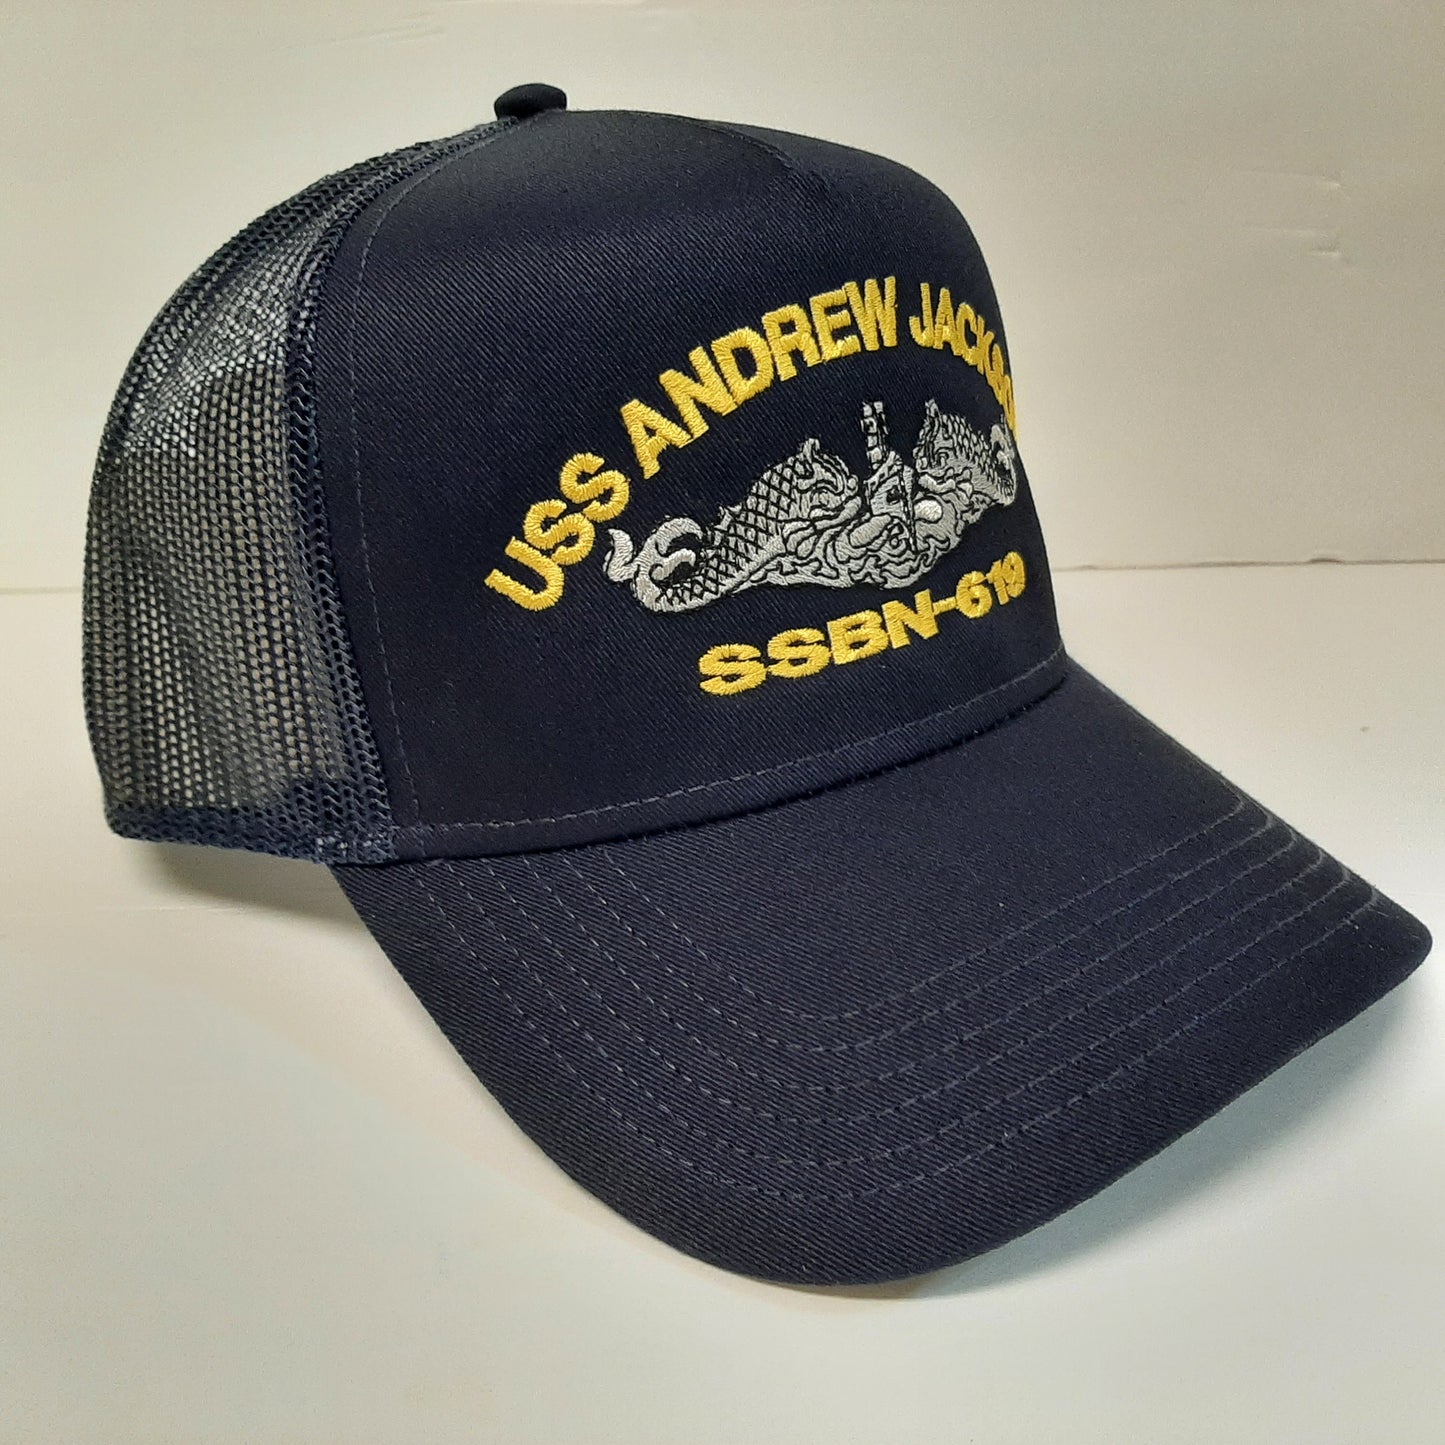 USS Andrew Jackson SSBN-619 U.S Navy Ship Boat Hat Cap Mesh Snapback Blue